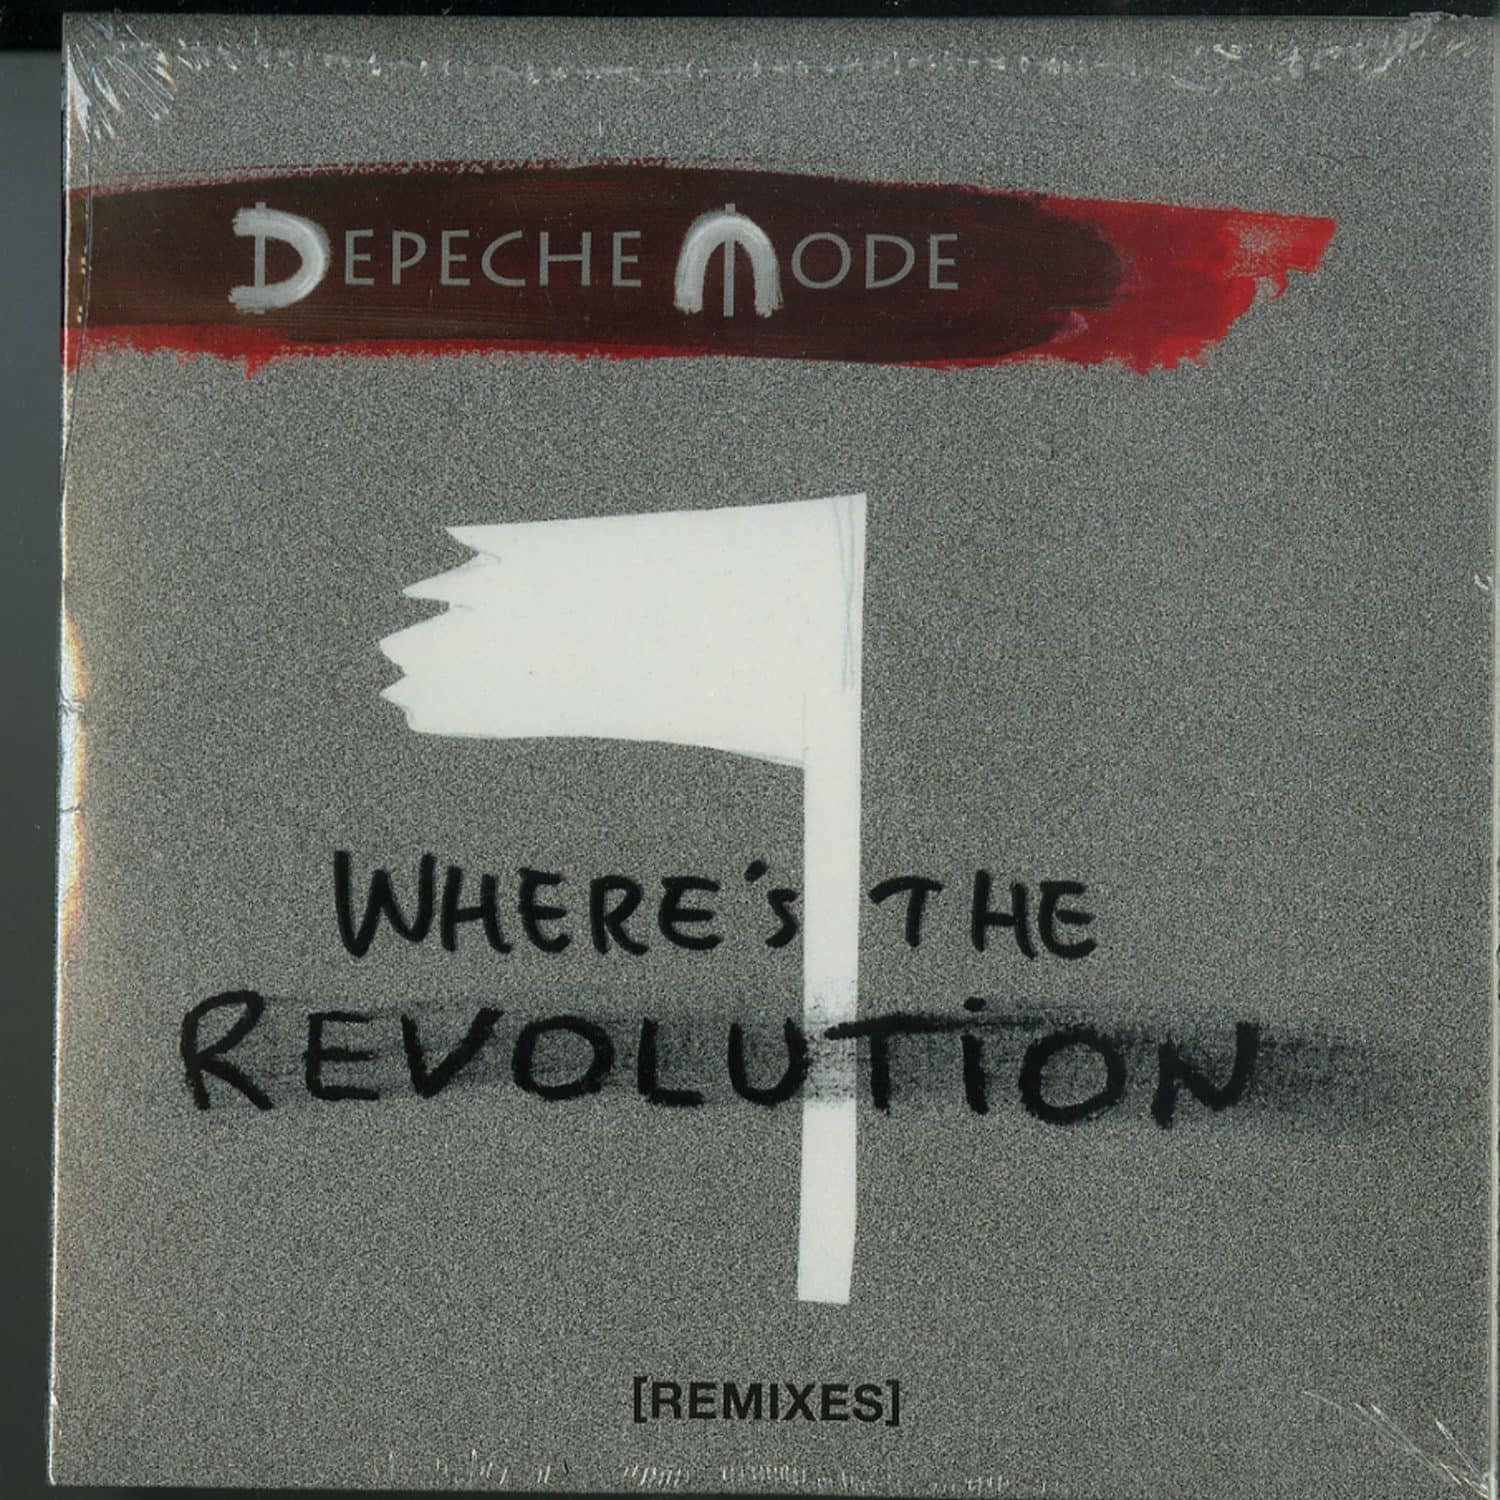 Depeche Mode - WHERES THE REVOLUTION REMIXES 